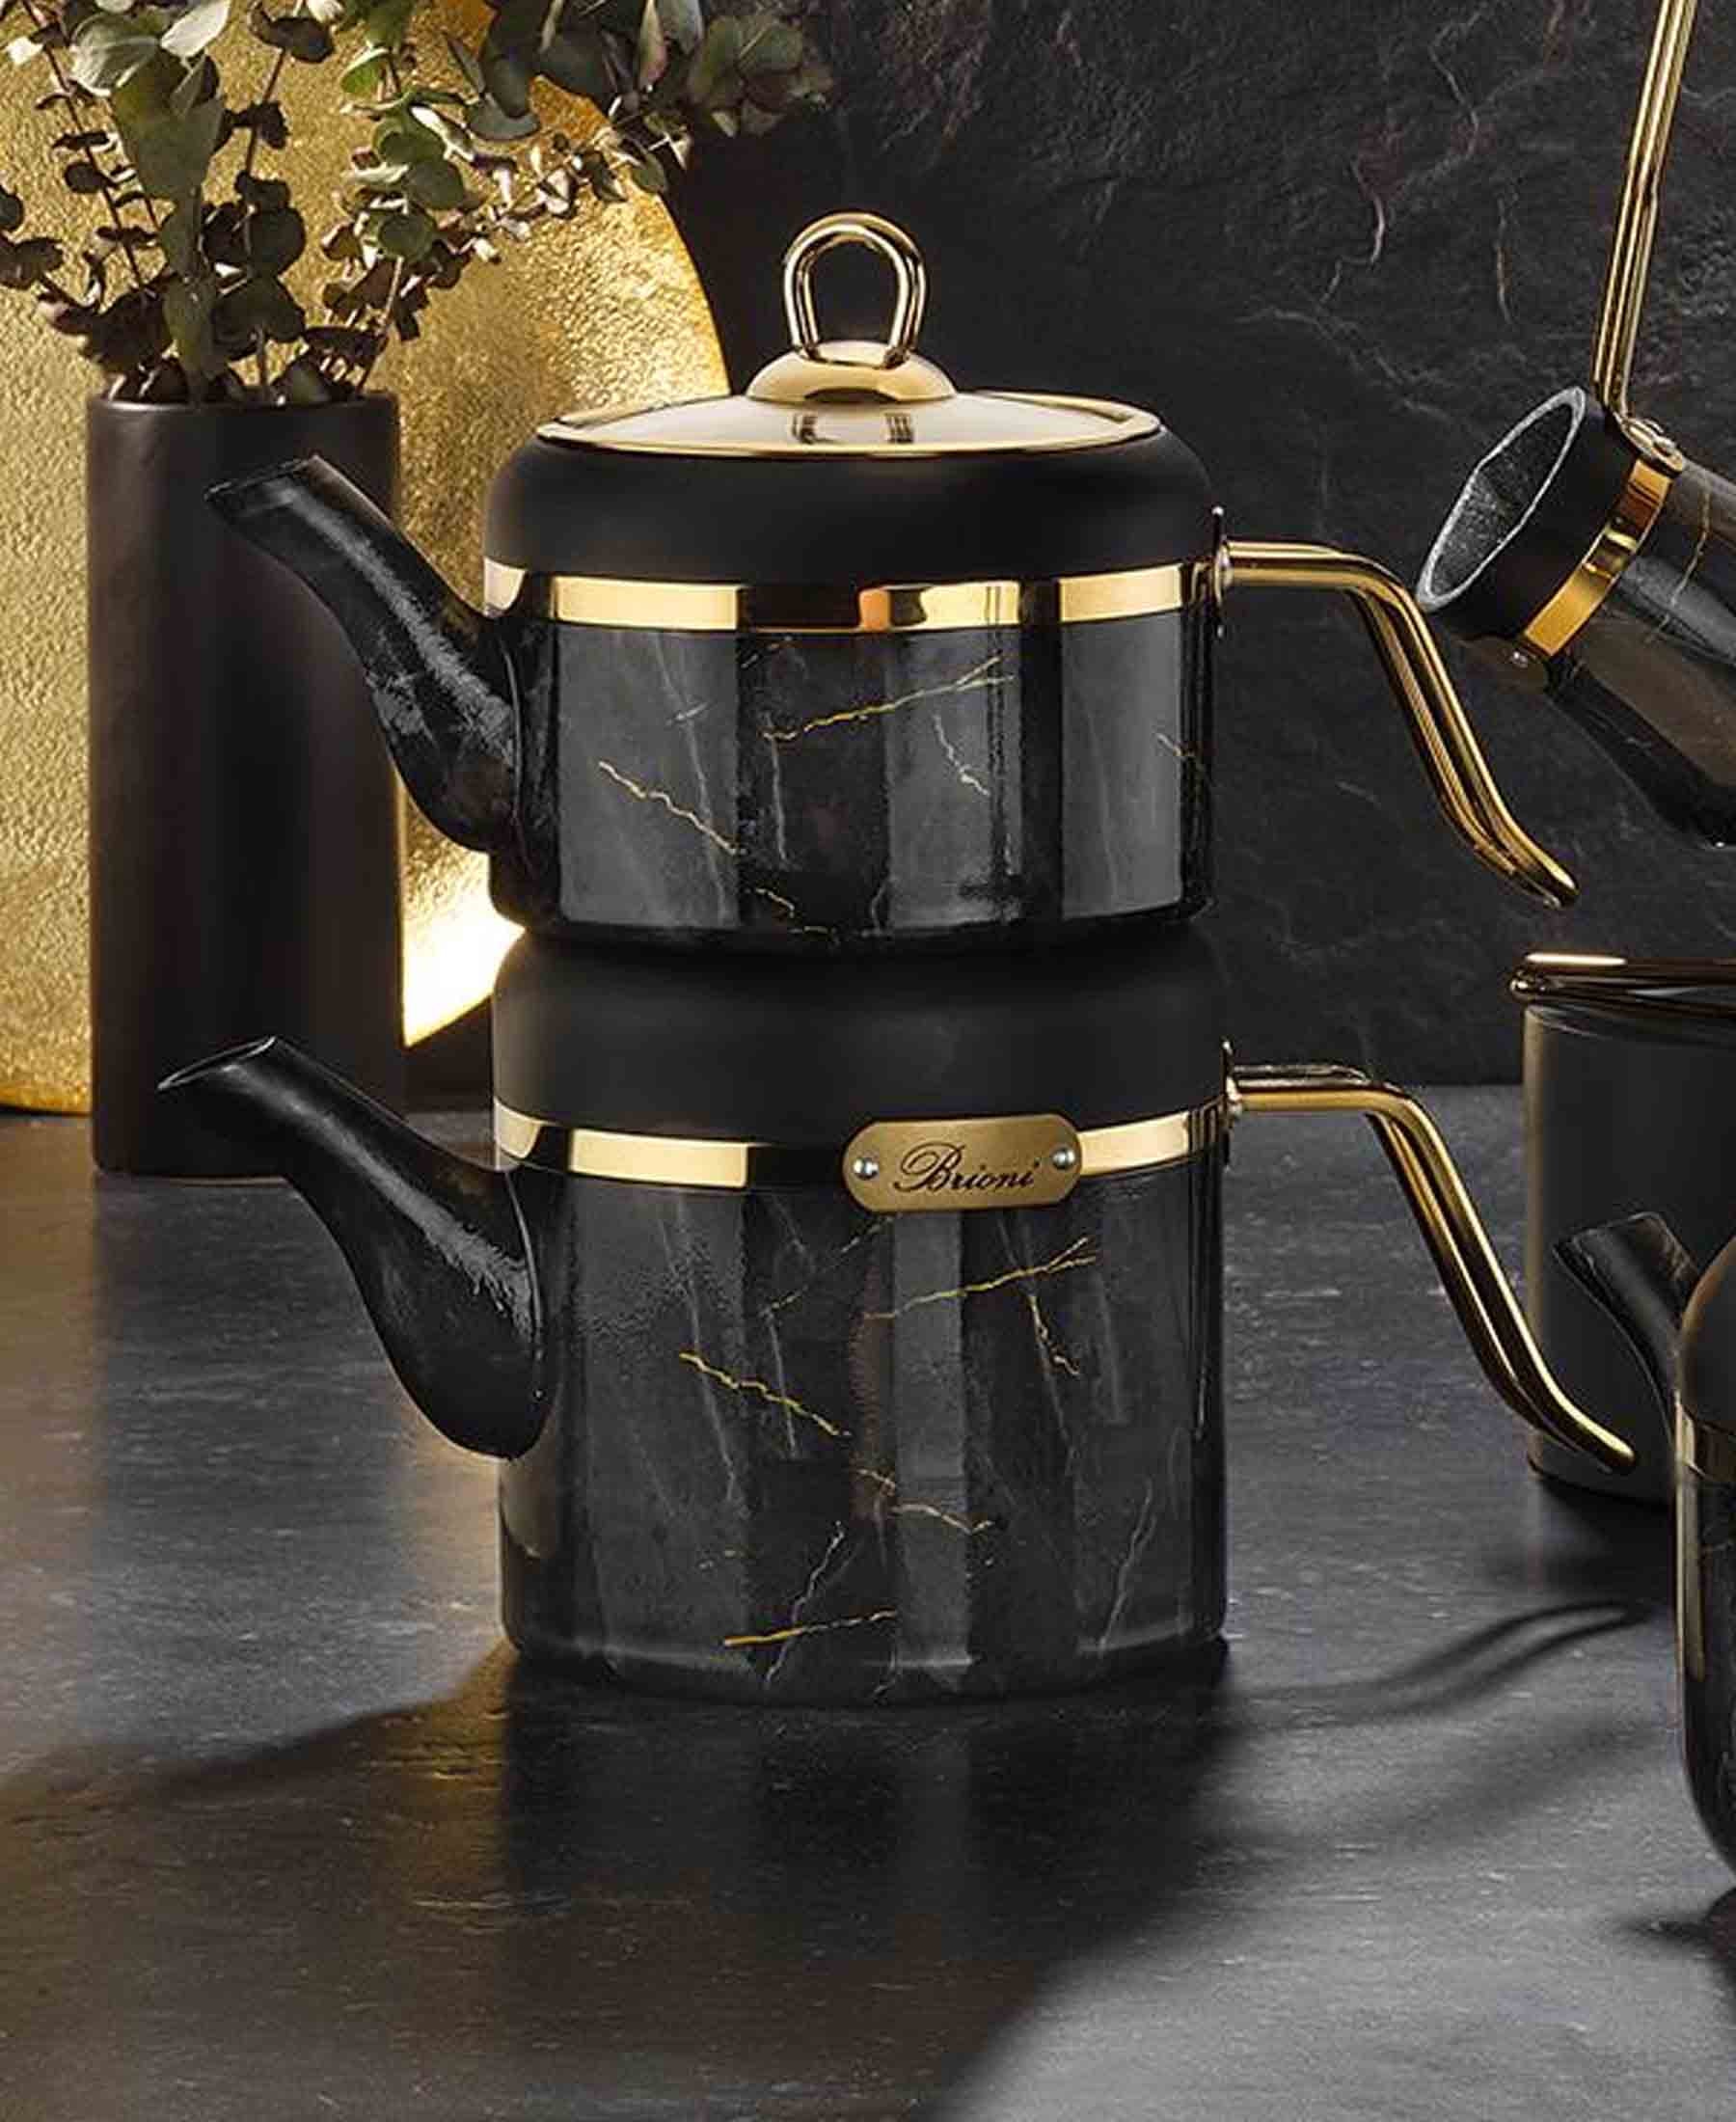 Brioni Selection Granite Teapot Set - Black